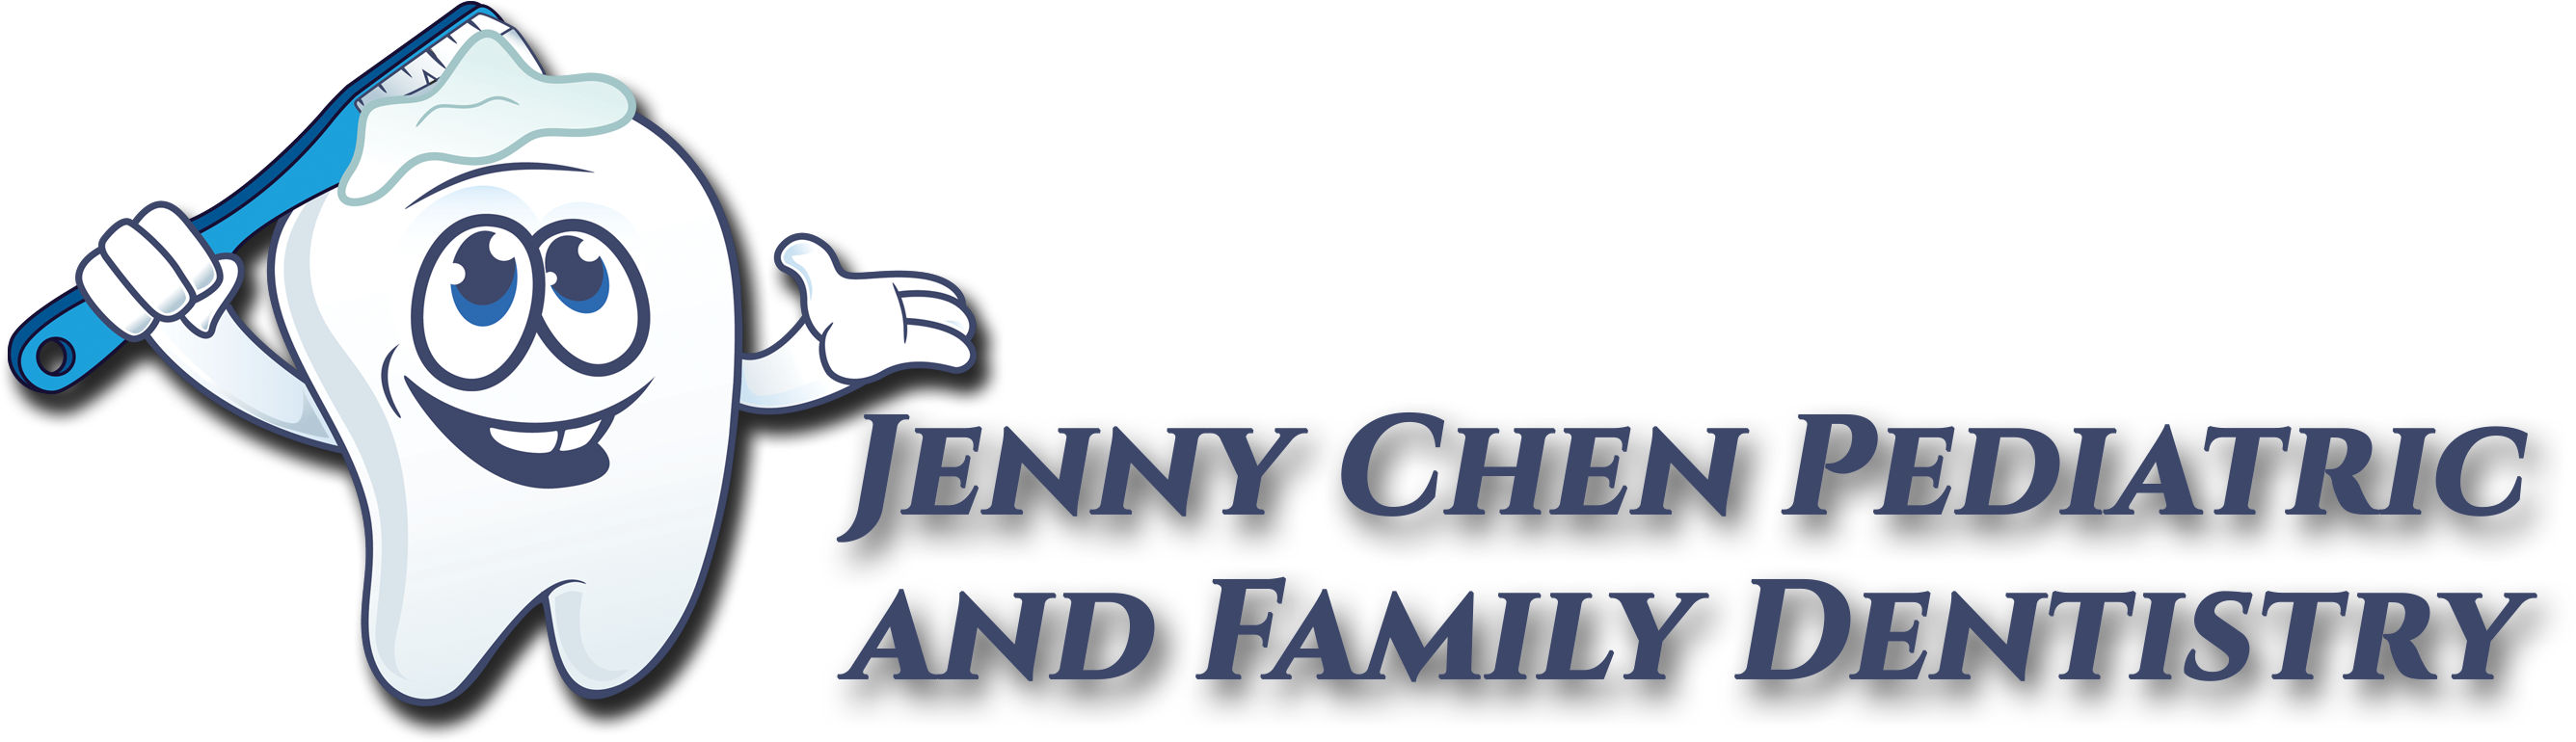 Visit Jenny Chen Pediatric and Family Dentistry